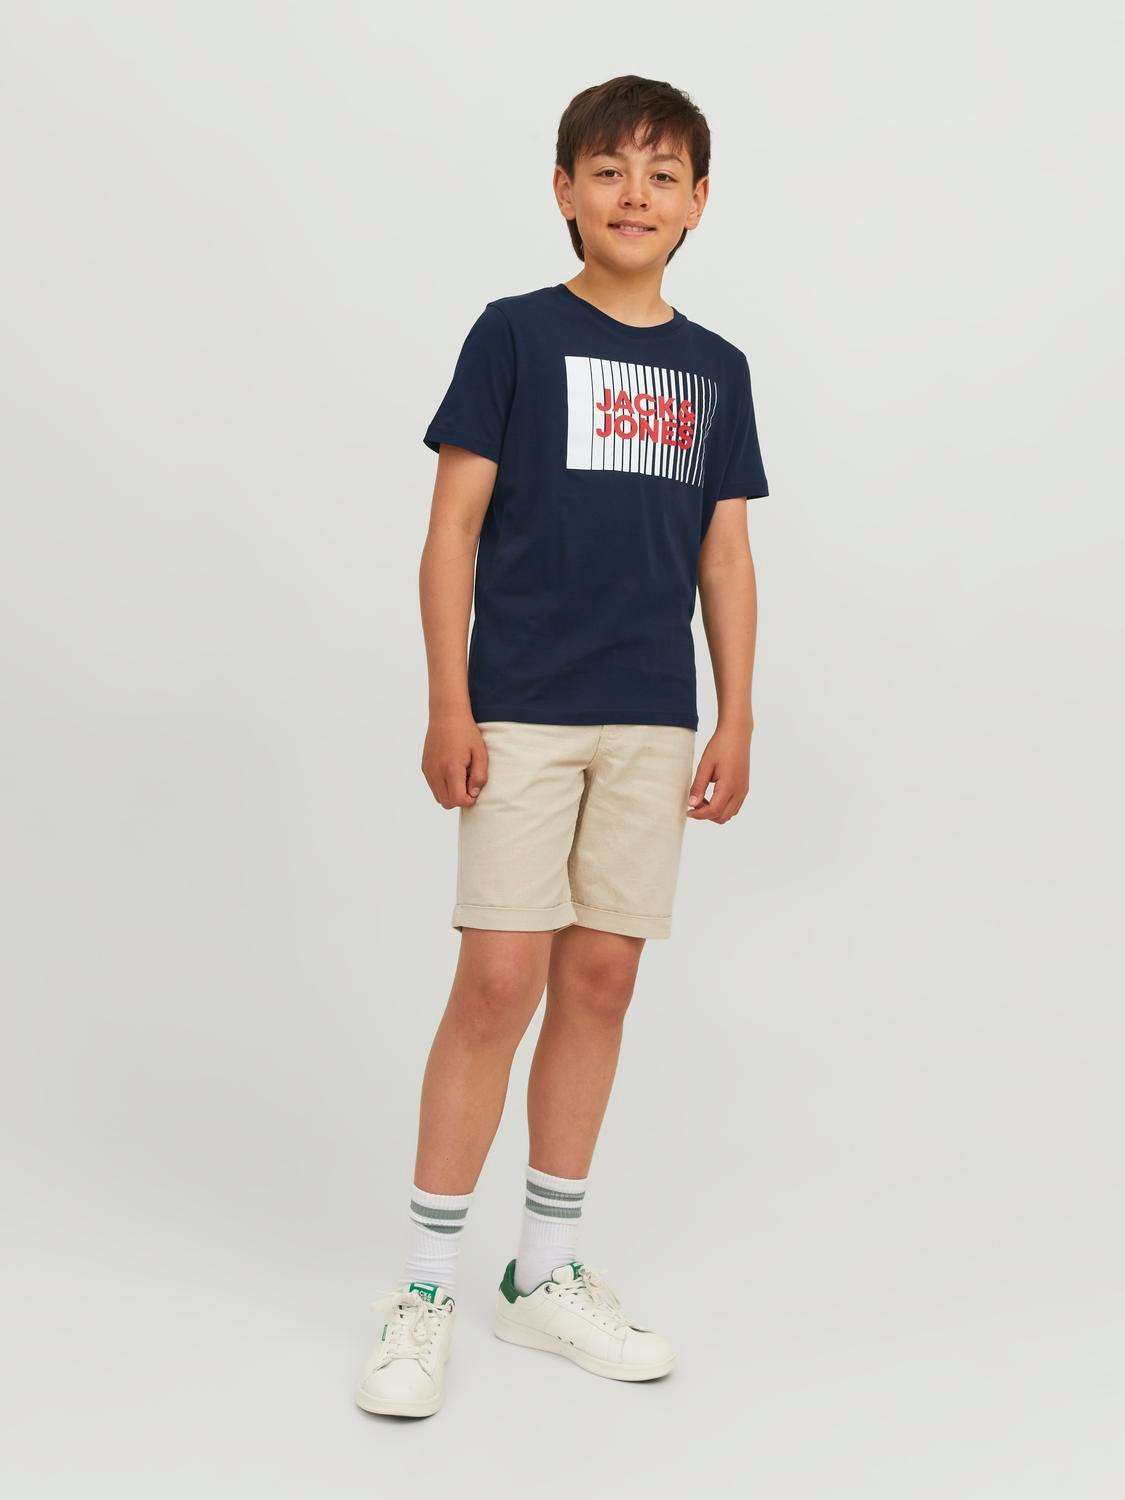 Jack & Jones Printed T-shirt Mini -Navy Blazer - 12257365